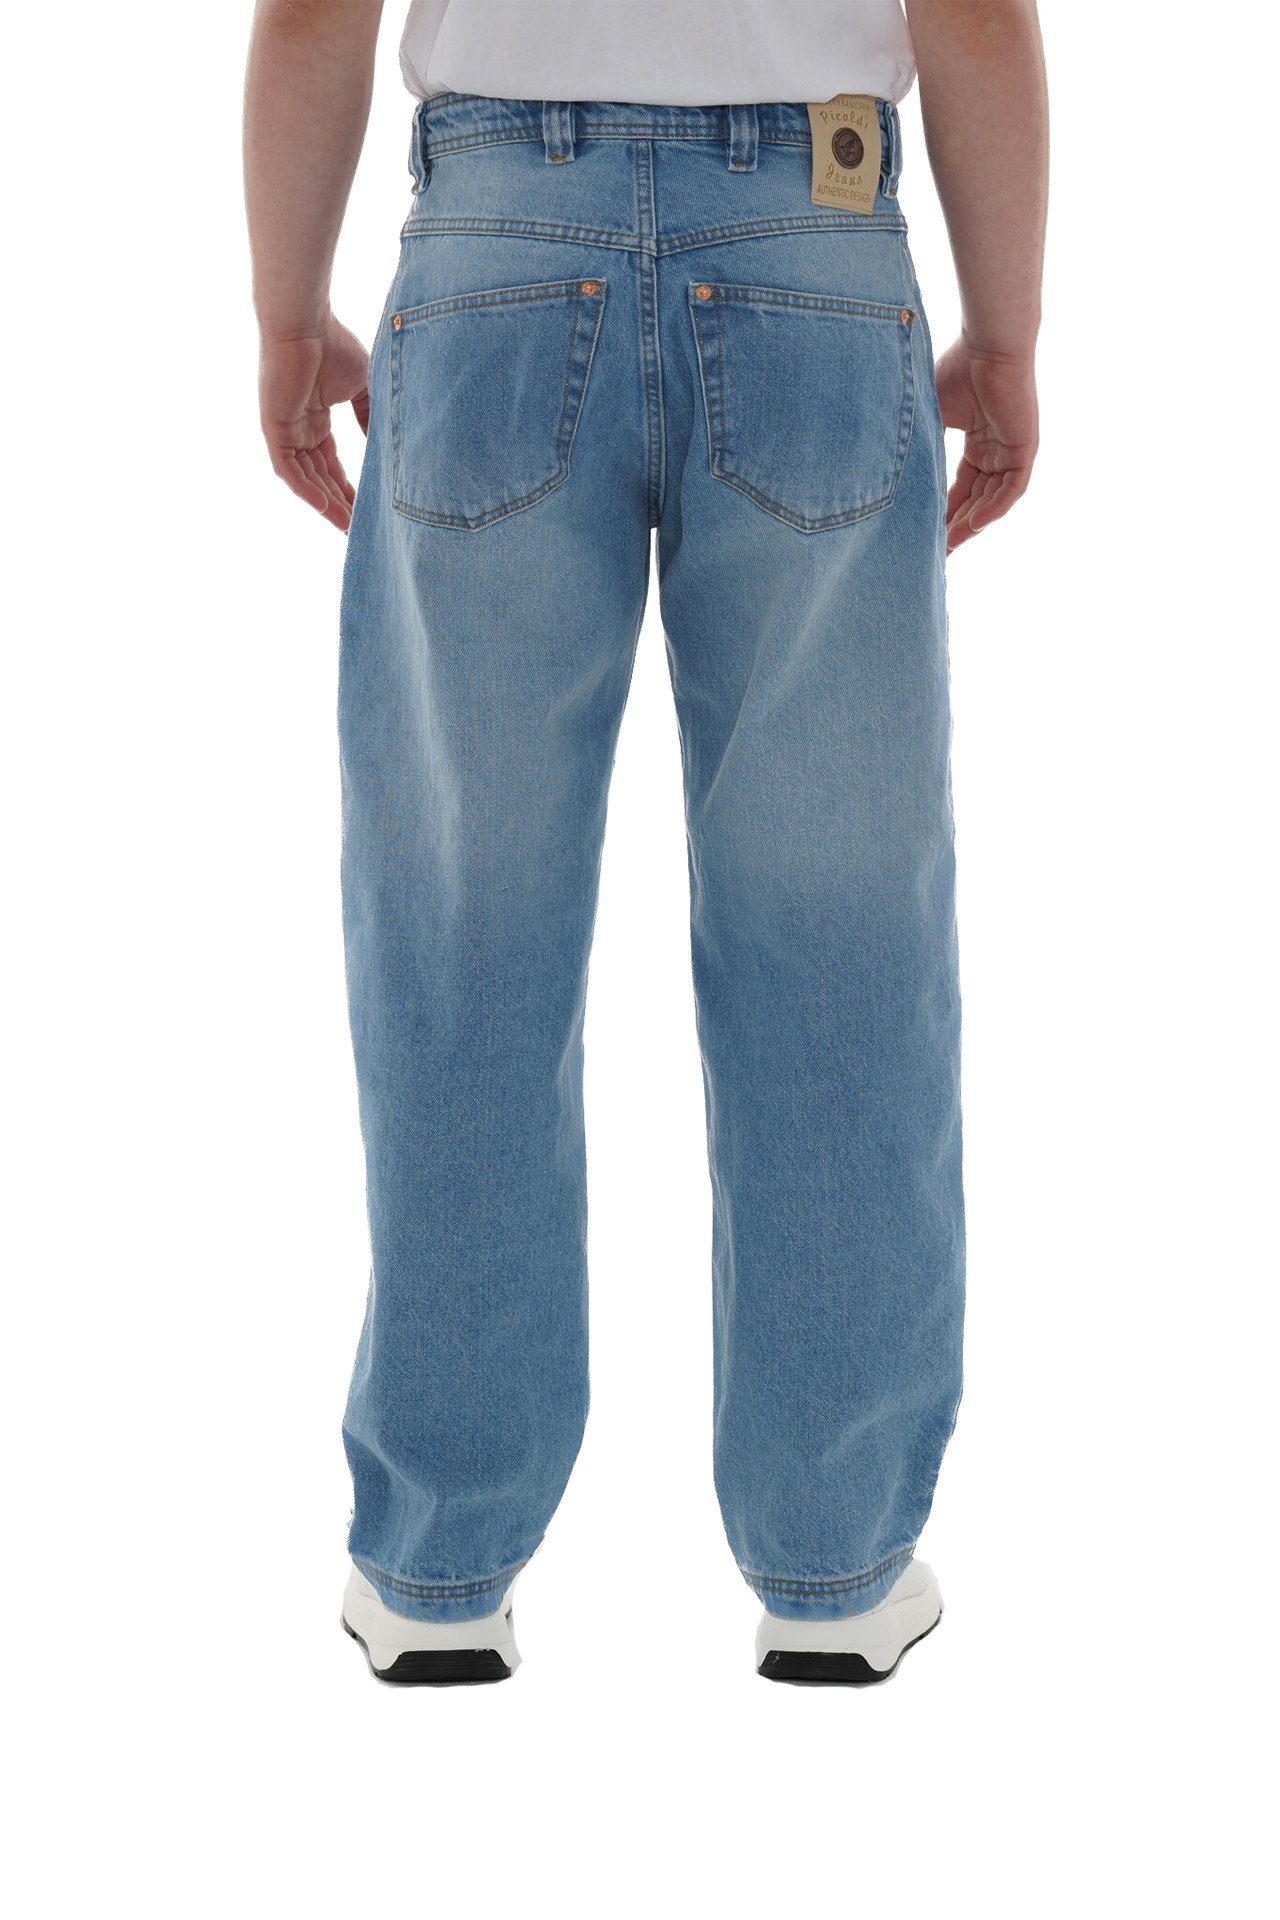 PICALDI Jeans Raze Pocket Weite Five 471 Zicco Jeans Loose Fit, Jeans